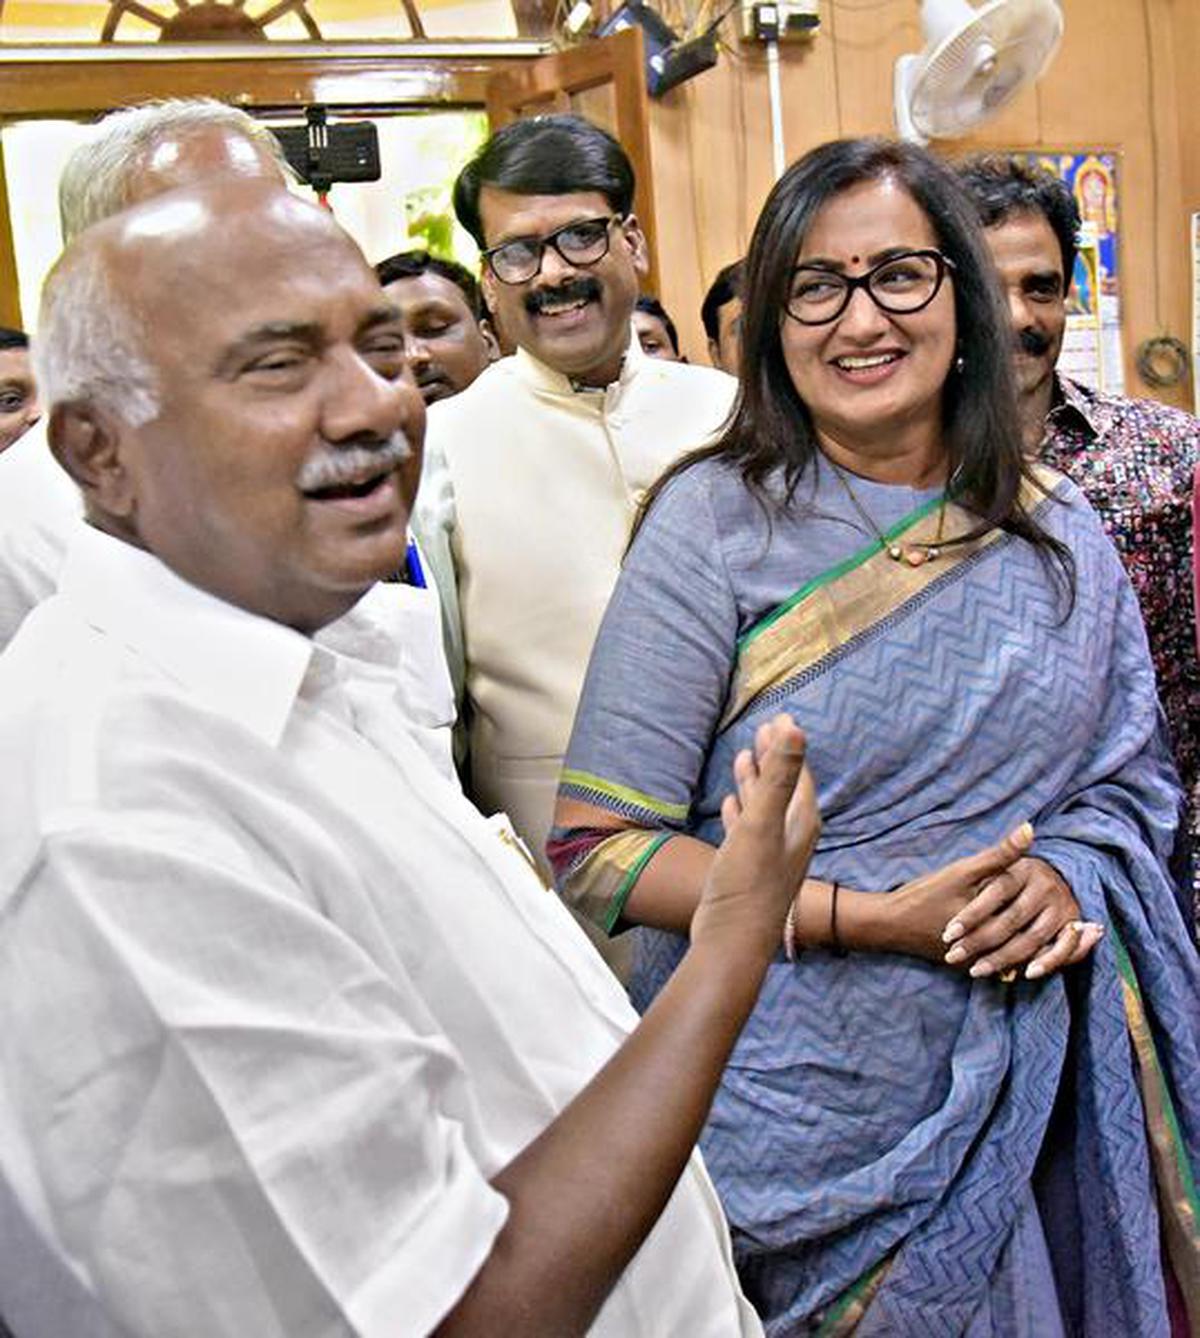 Free Sumalatha Porn - Sumalatha to take a call on ties with BJP post polls - The Hindu